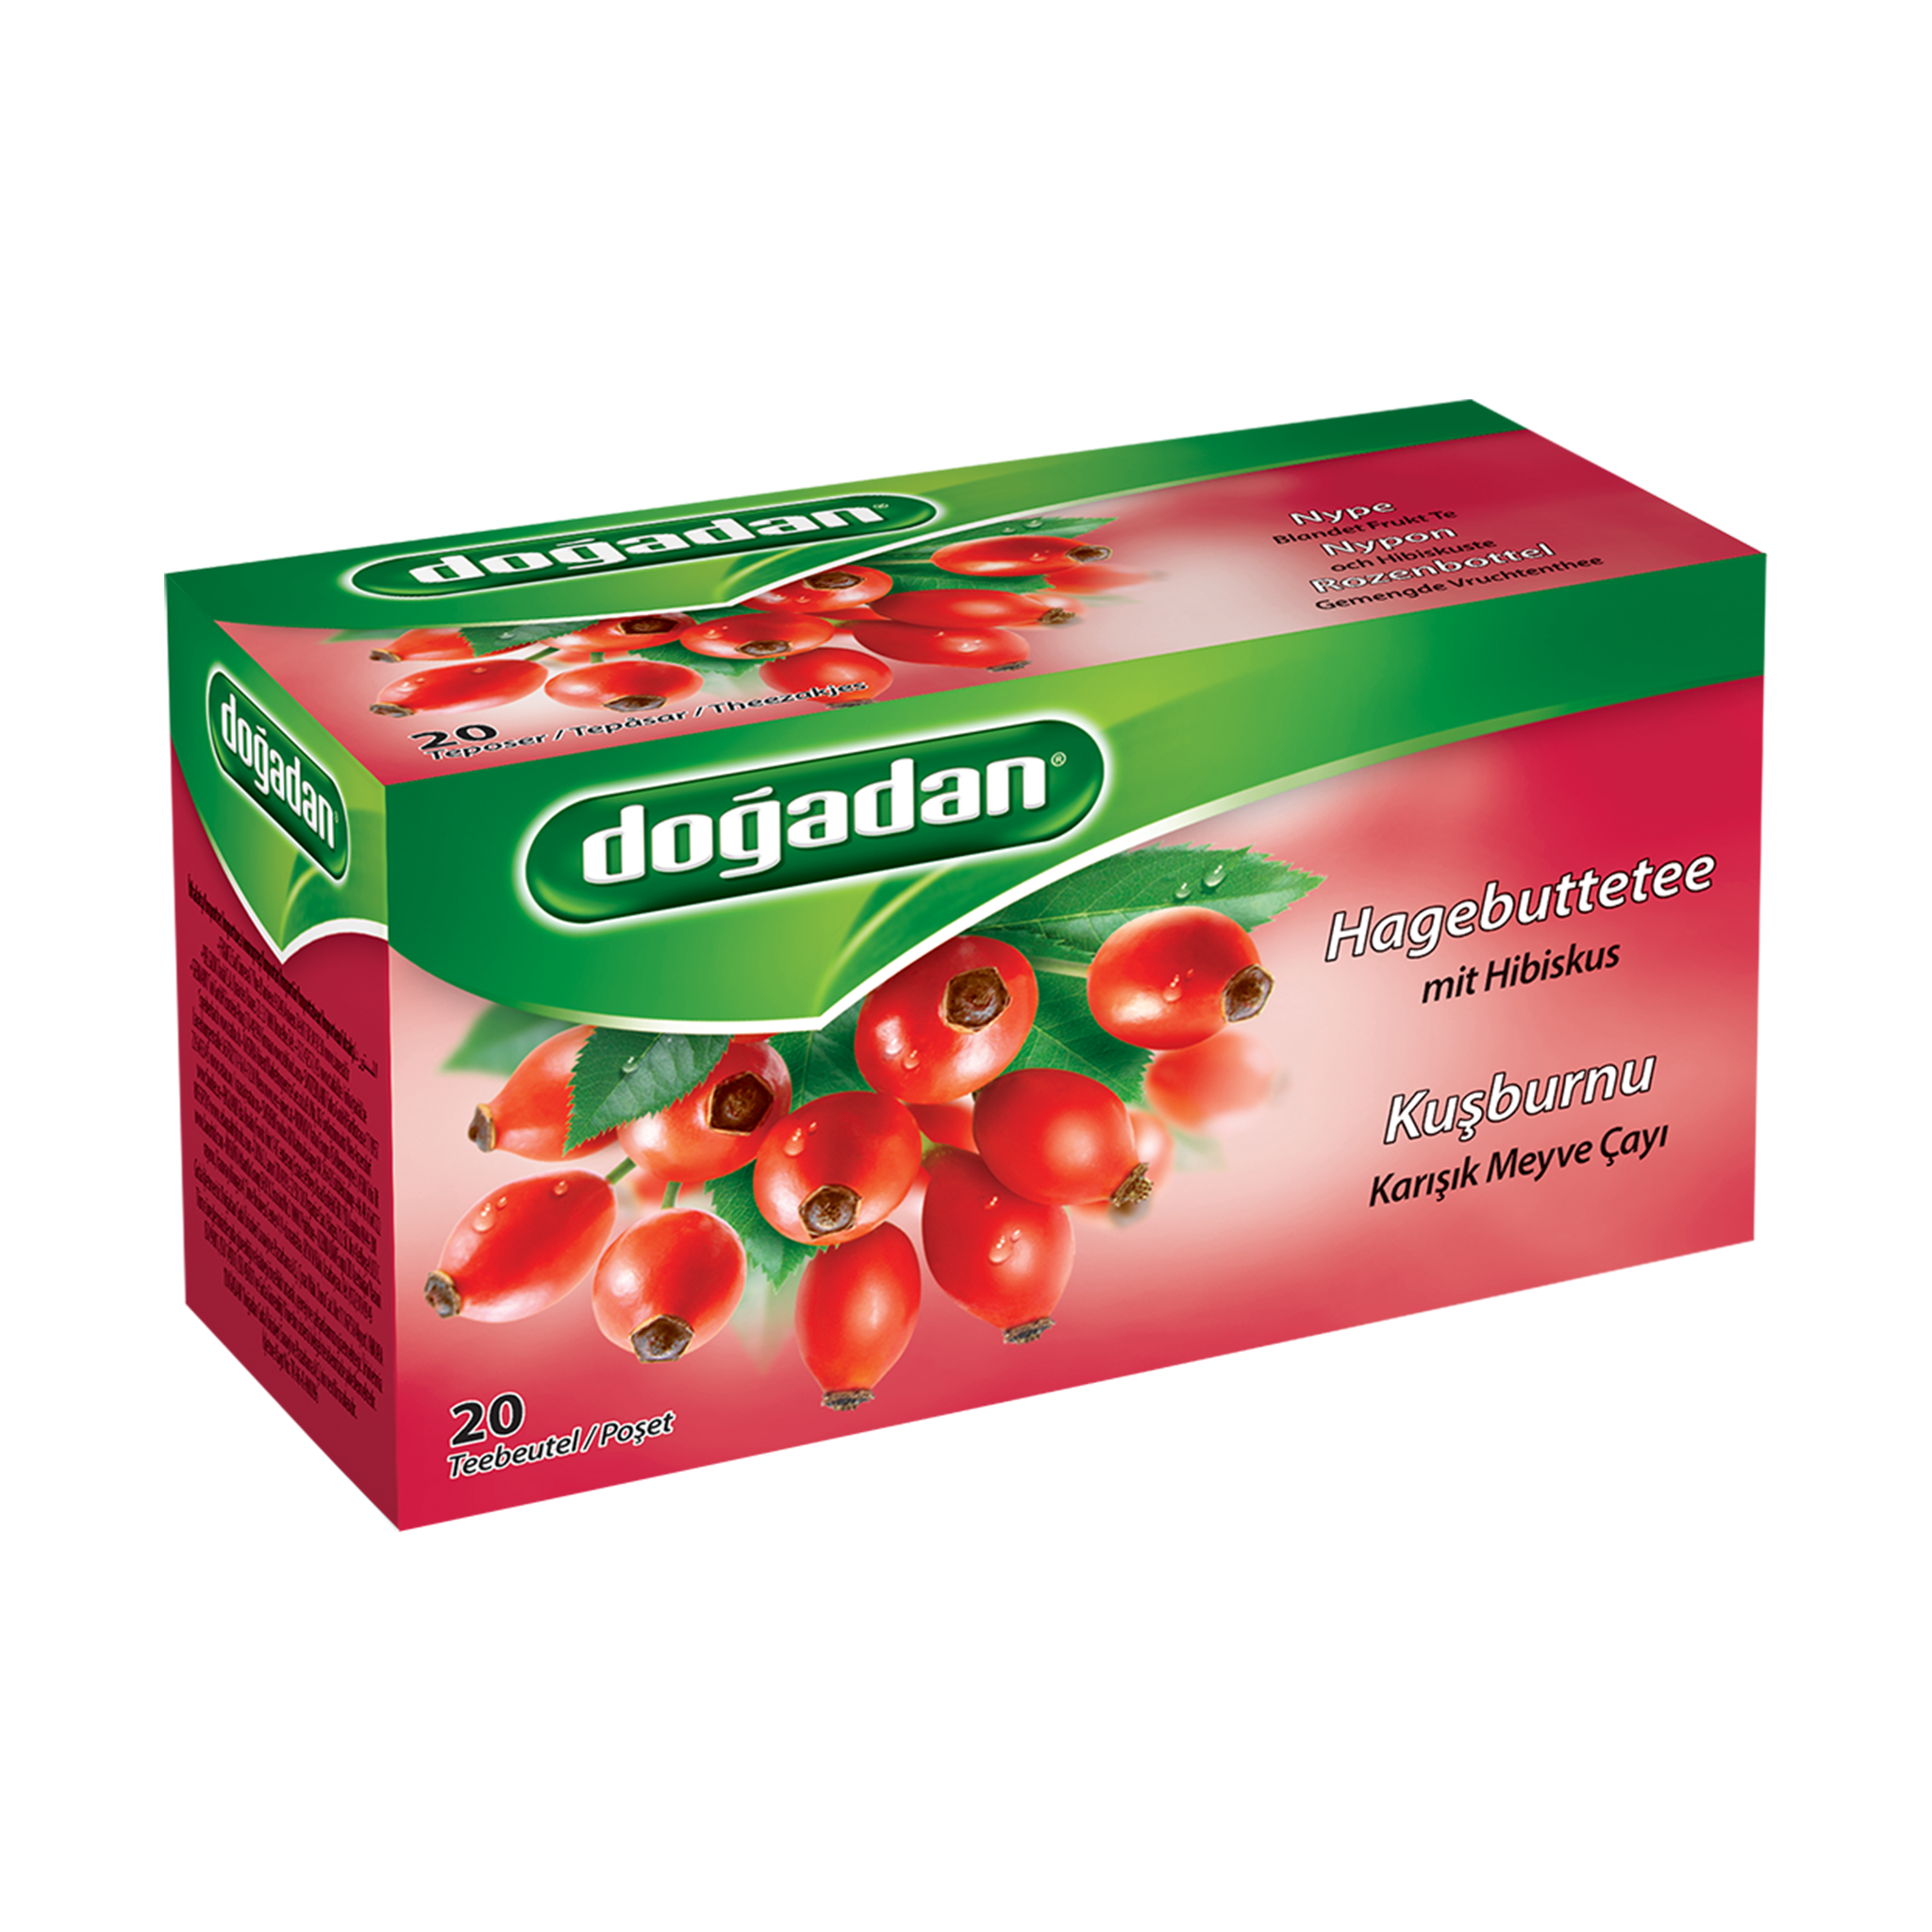 Dogadan Rosehip Tea 2.5g×20P | Dogadan Kusburnu Karisik Meyve Cayi | Rosehip Fruit Infusion